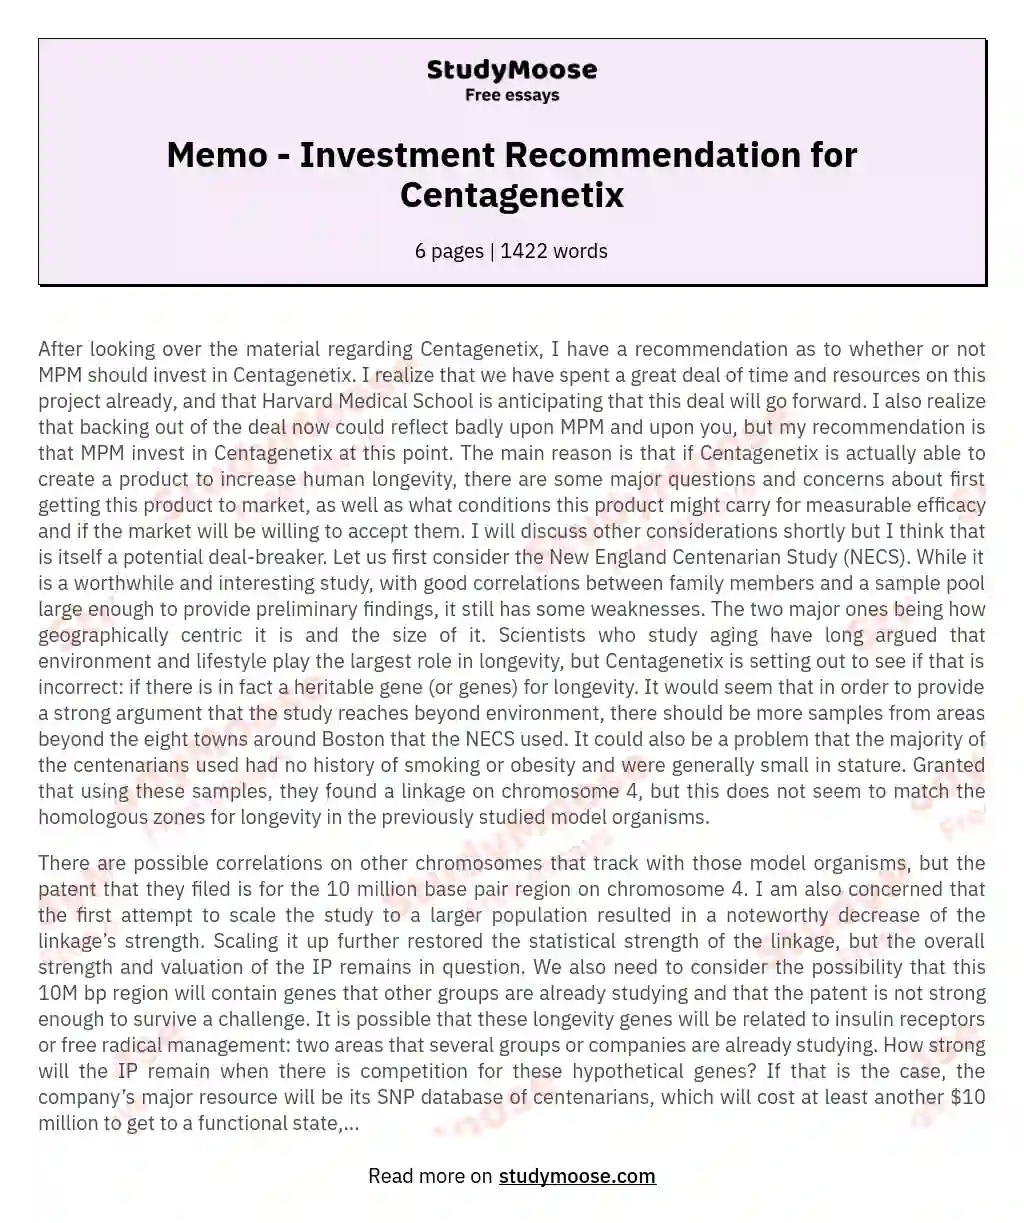 Memo - Investment Recommendation for Centagenetix